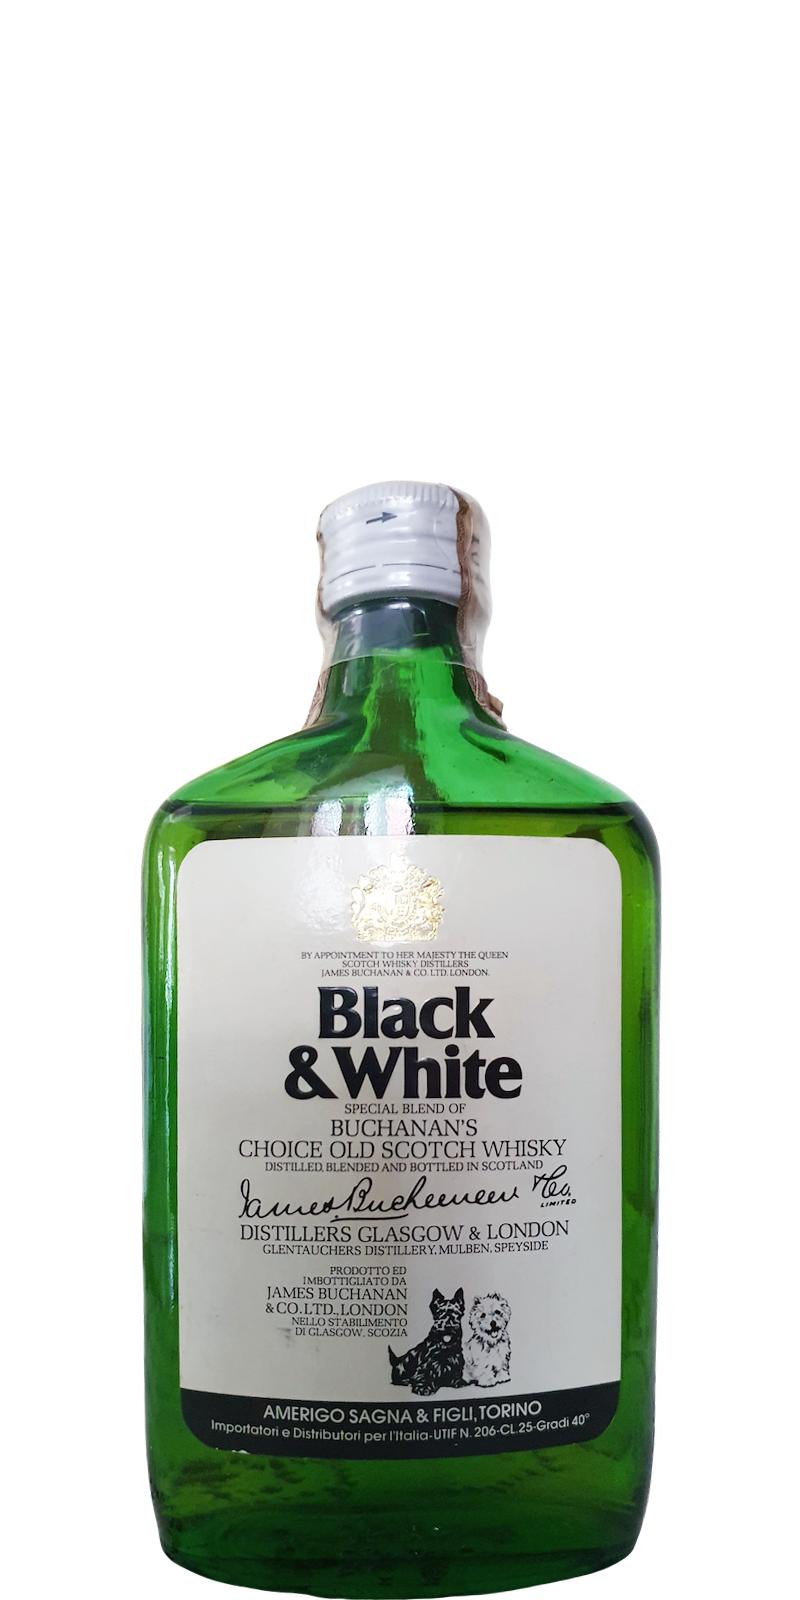 Black & White Buchanans Choice Old Scotch Whisky 40% 250ml